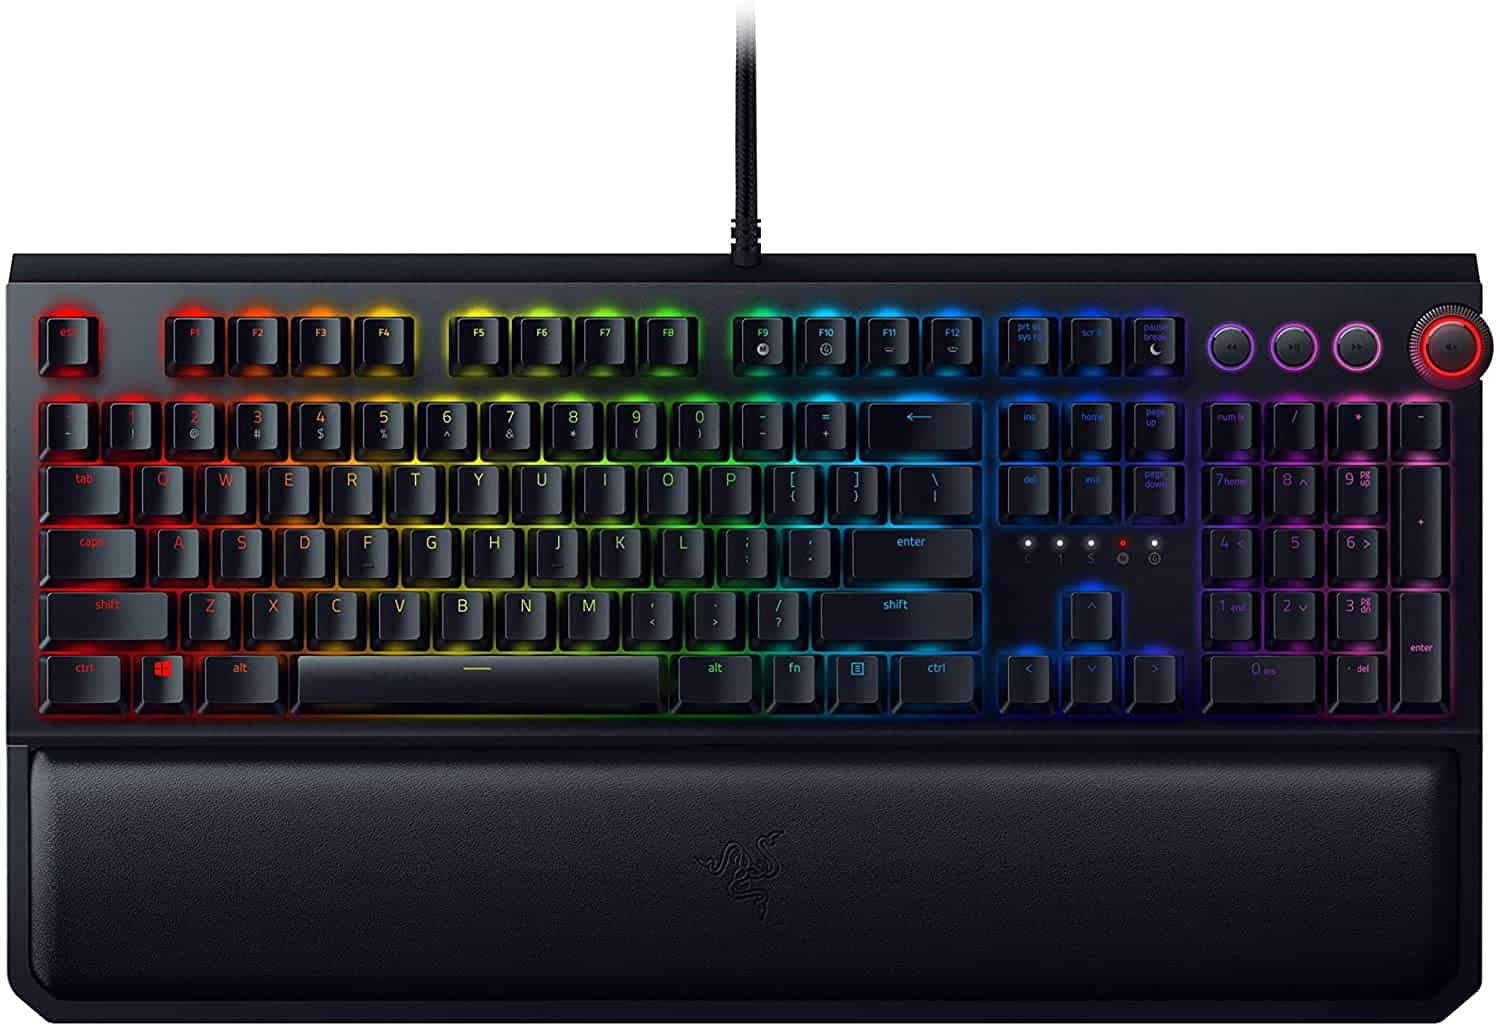 Deal Alert: Razer BlackWidow Elite Mechanical Gaming Keyboard discounted at Amazon